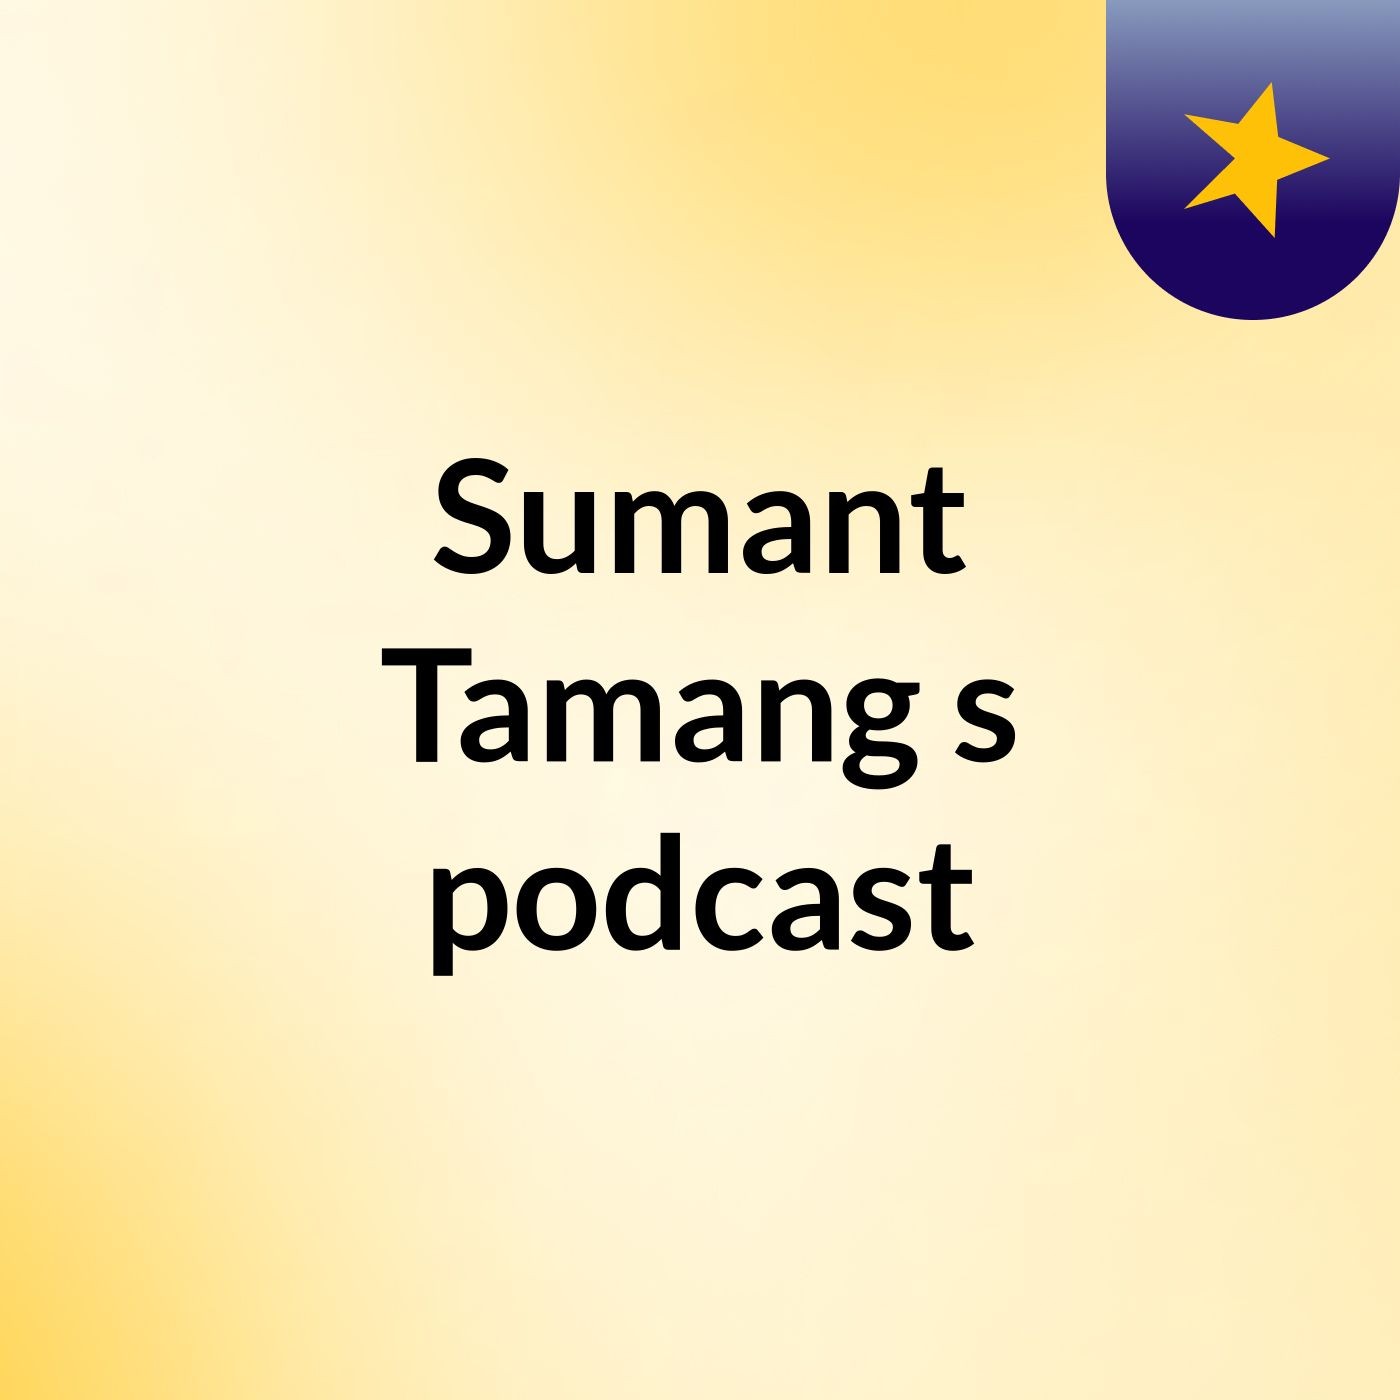 Sumant Tamang's podcast